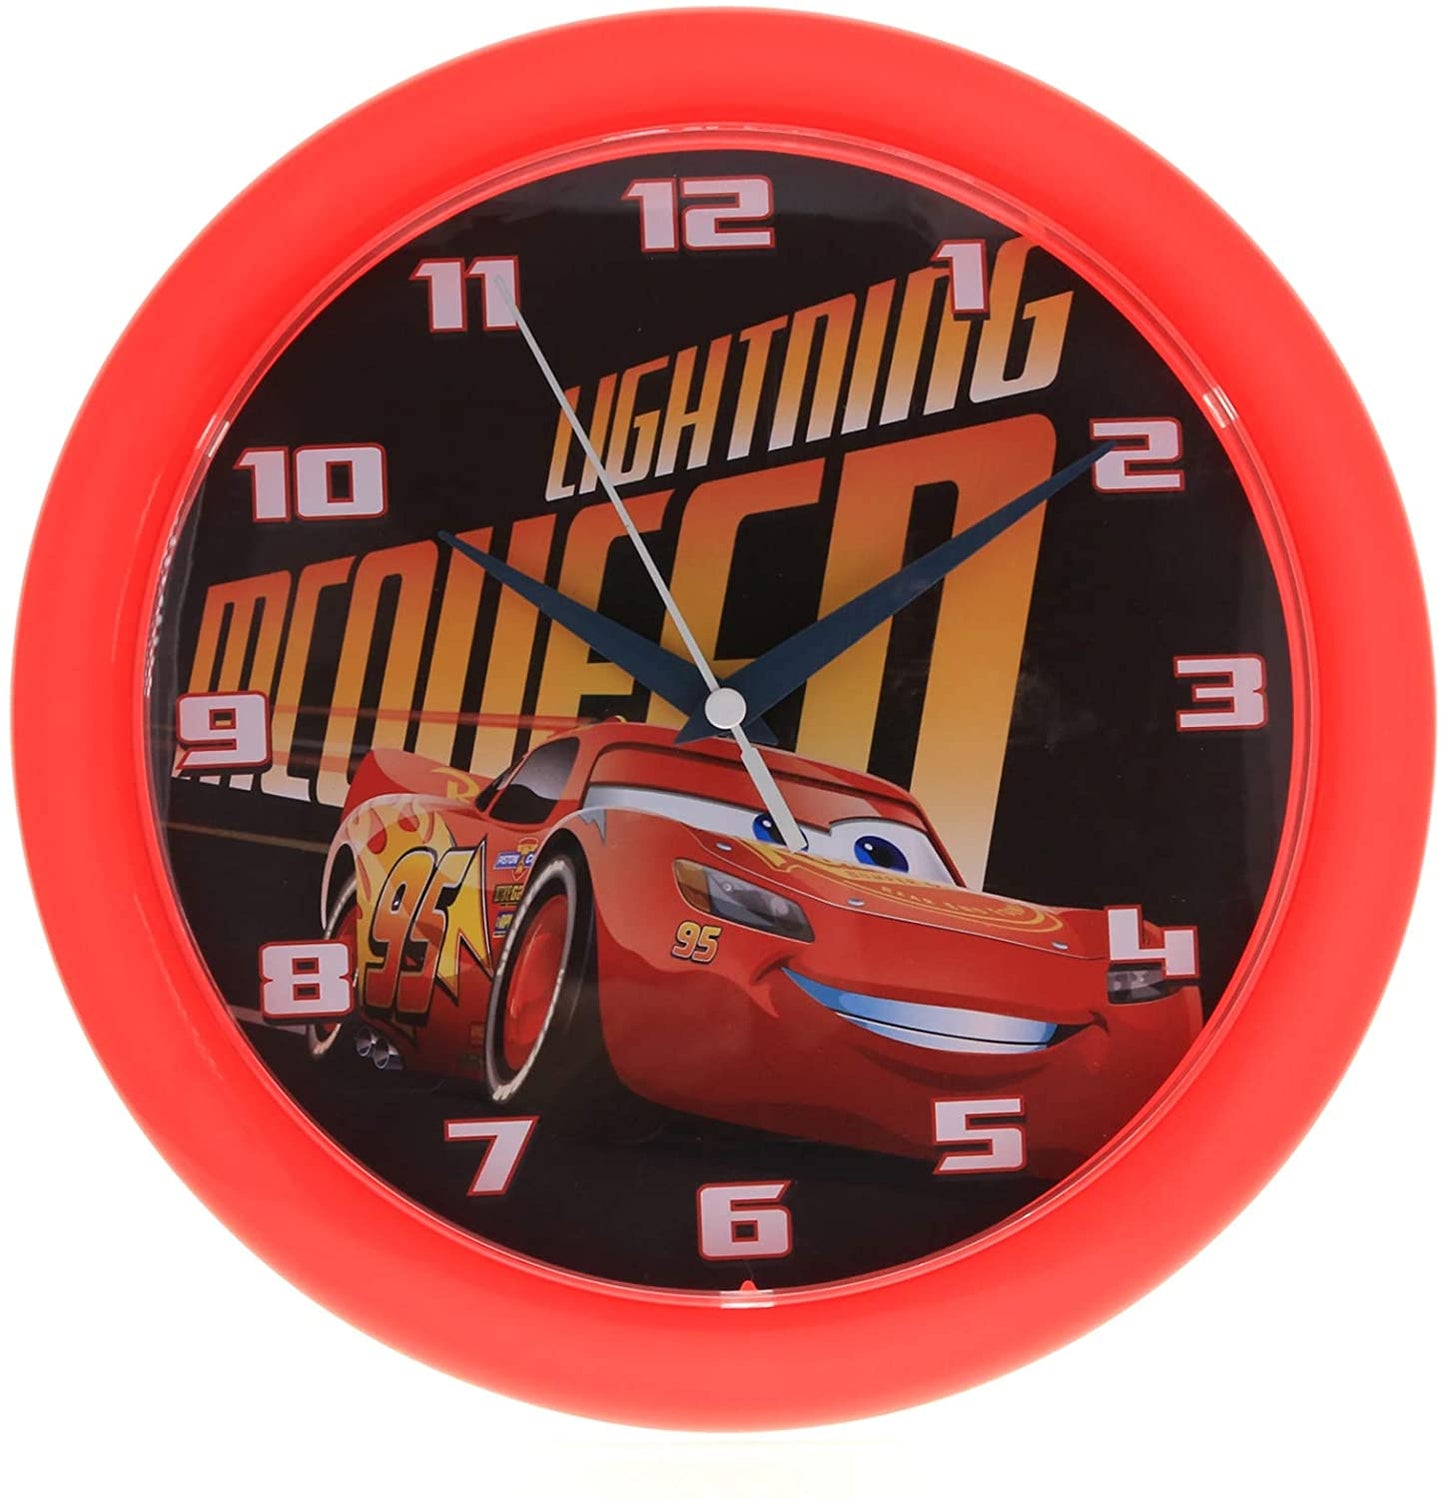 Disney Pixar Cars 3 Kids Wall Clock - 10 Inch Wall Clock Home Décor Analog Style Quartz Red